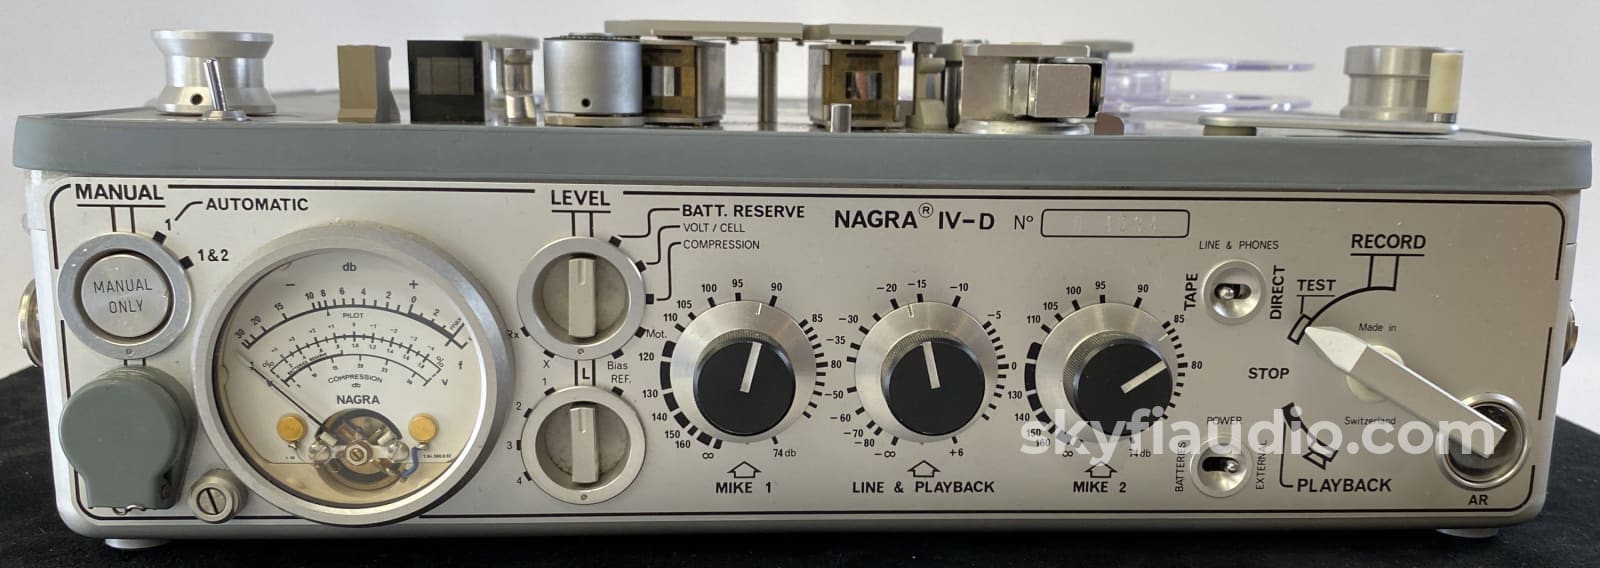 Nagra IV-D Portable Reel to Reel Tape Recorder